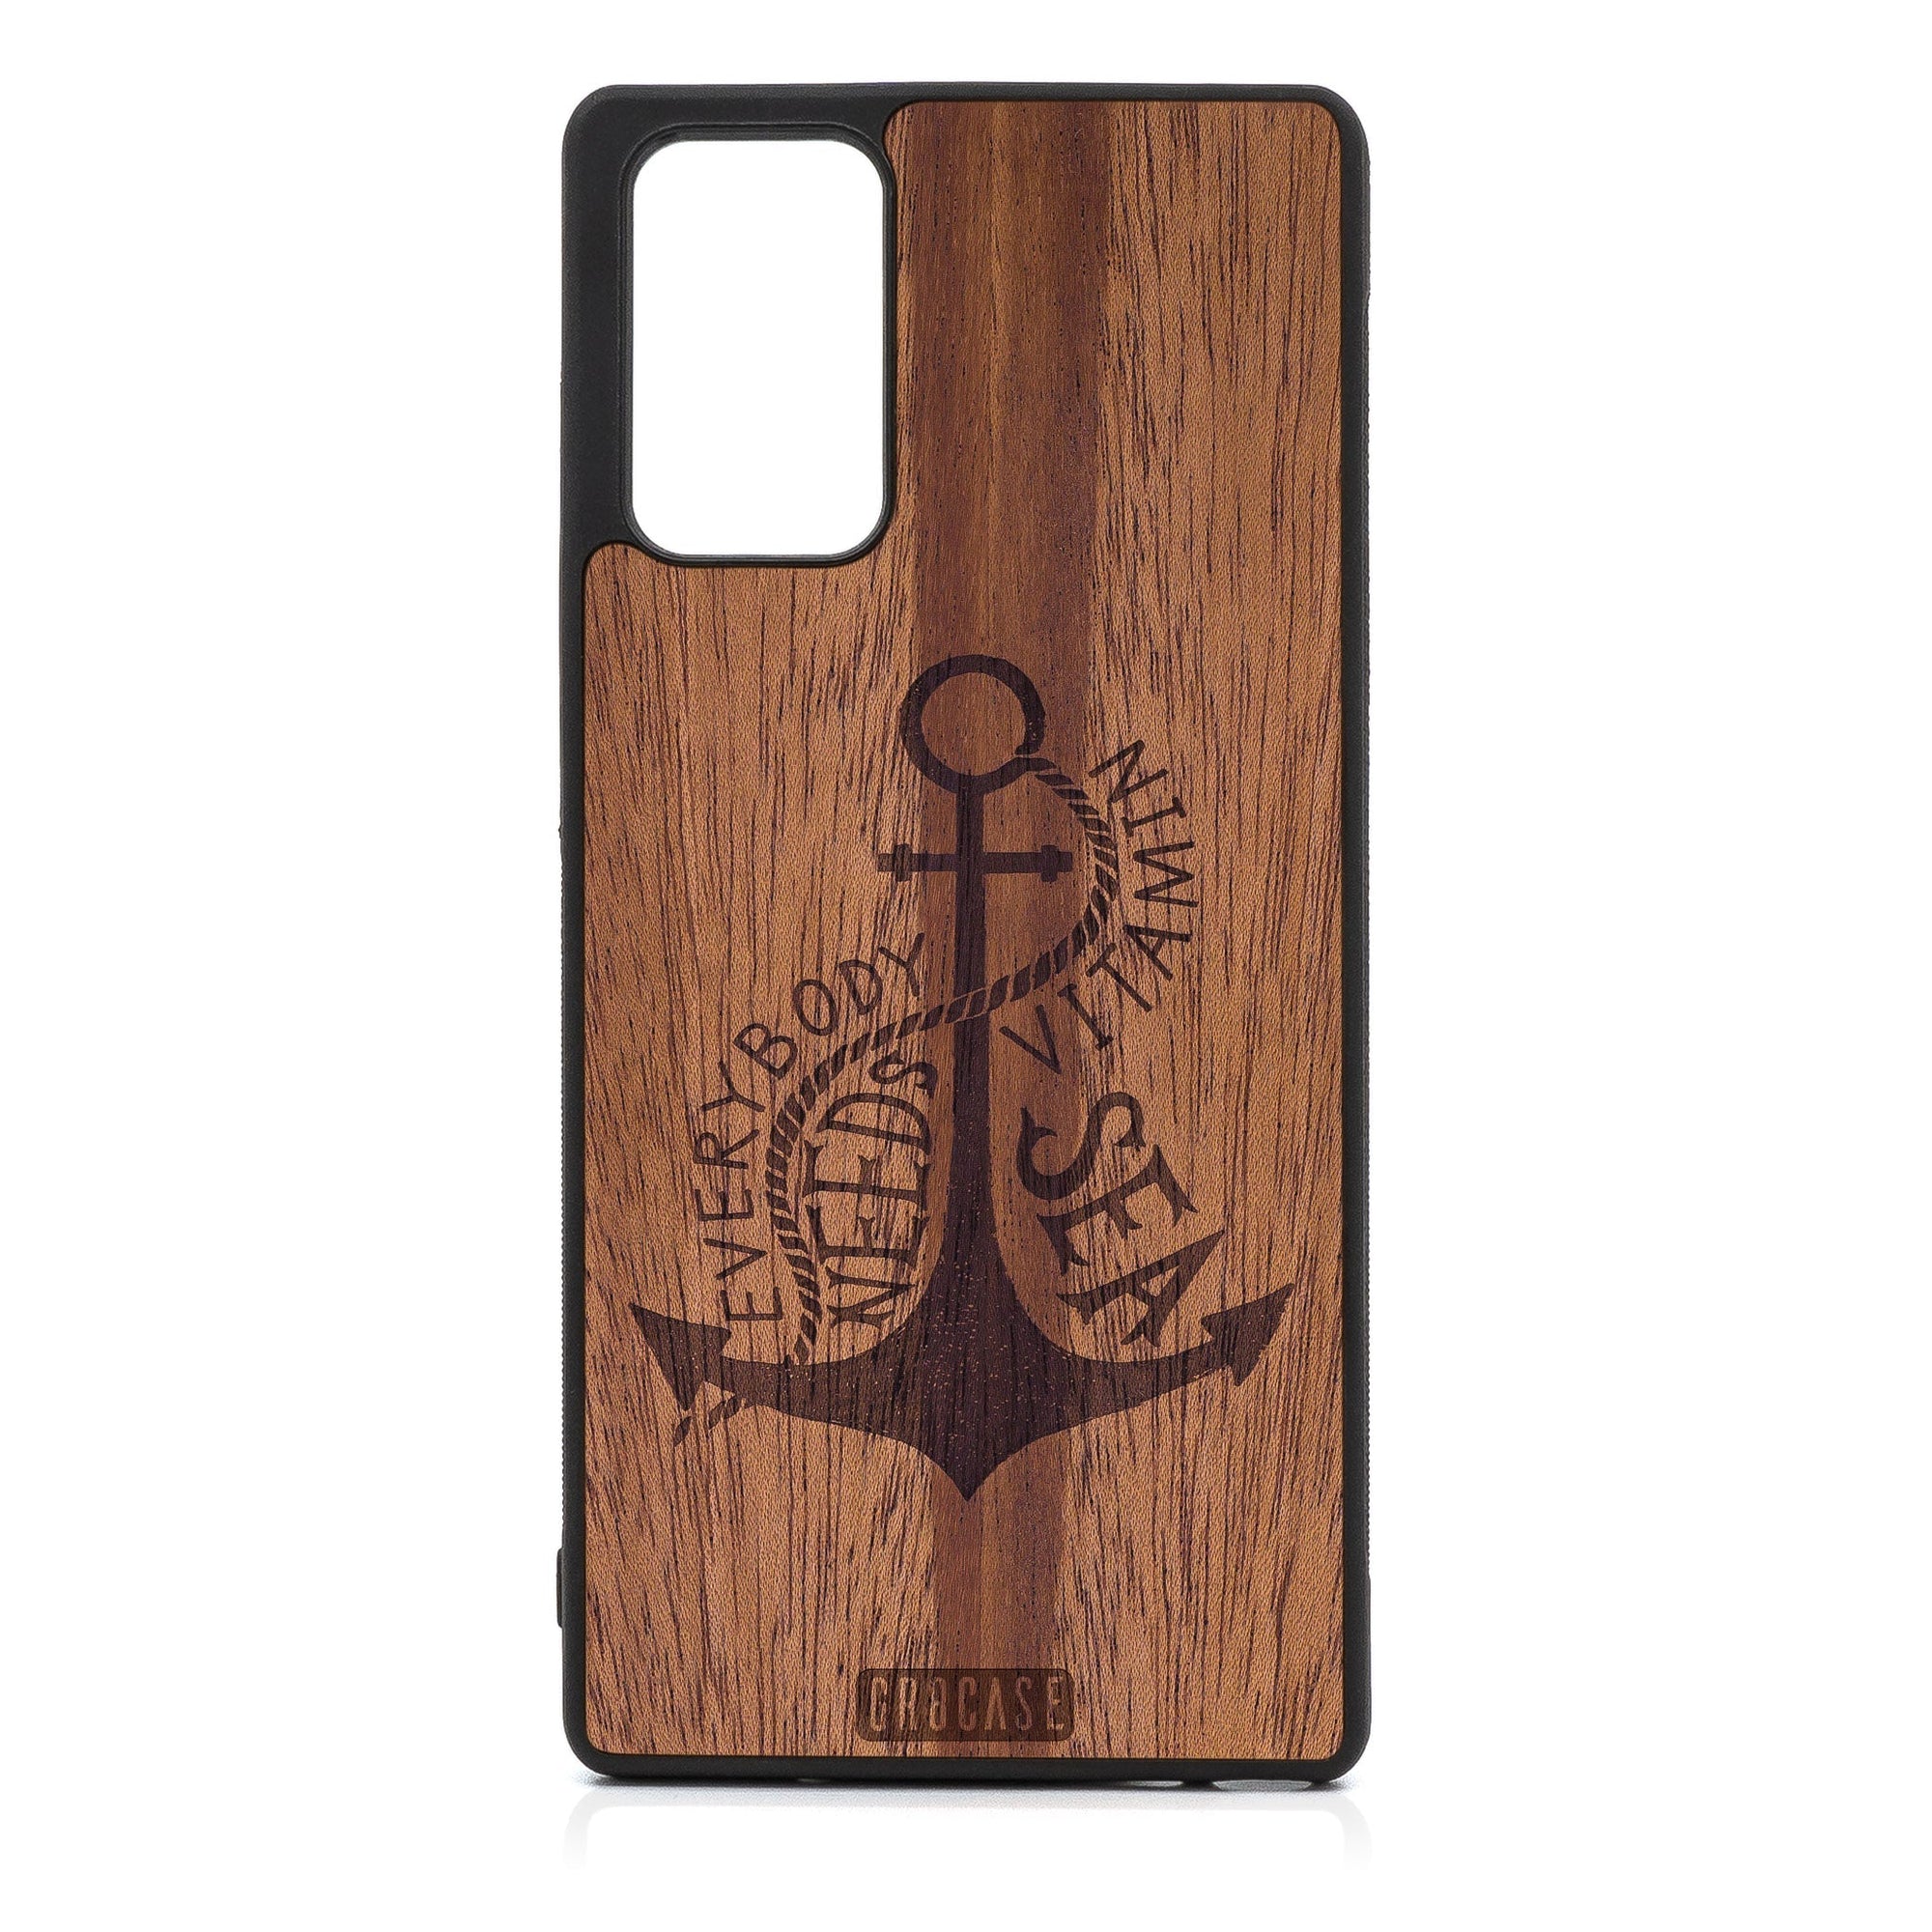 Everybody Needs Vitamin Sea (Anchor) Design Wood Case For Samsung Galaxy A72 5G